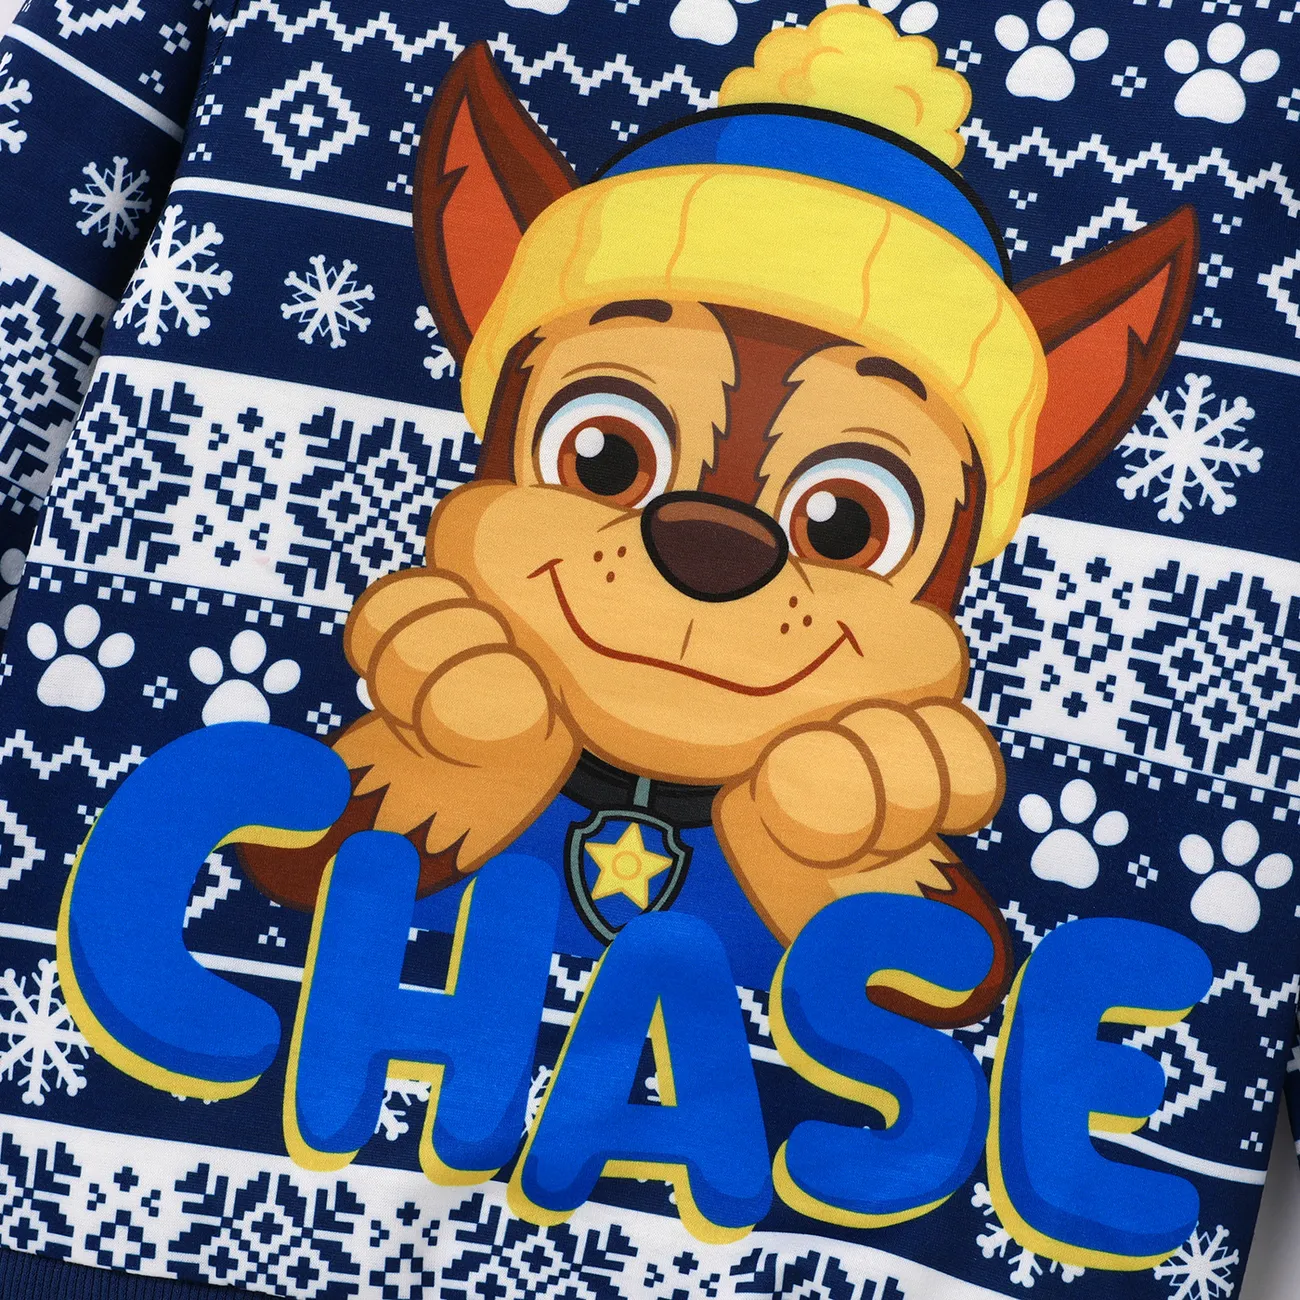 PAW Patrol Toddler Girl/Boy Christmas Snowflake Print Sweatshirt Deep Blue big image 1